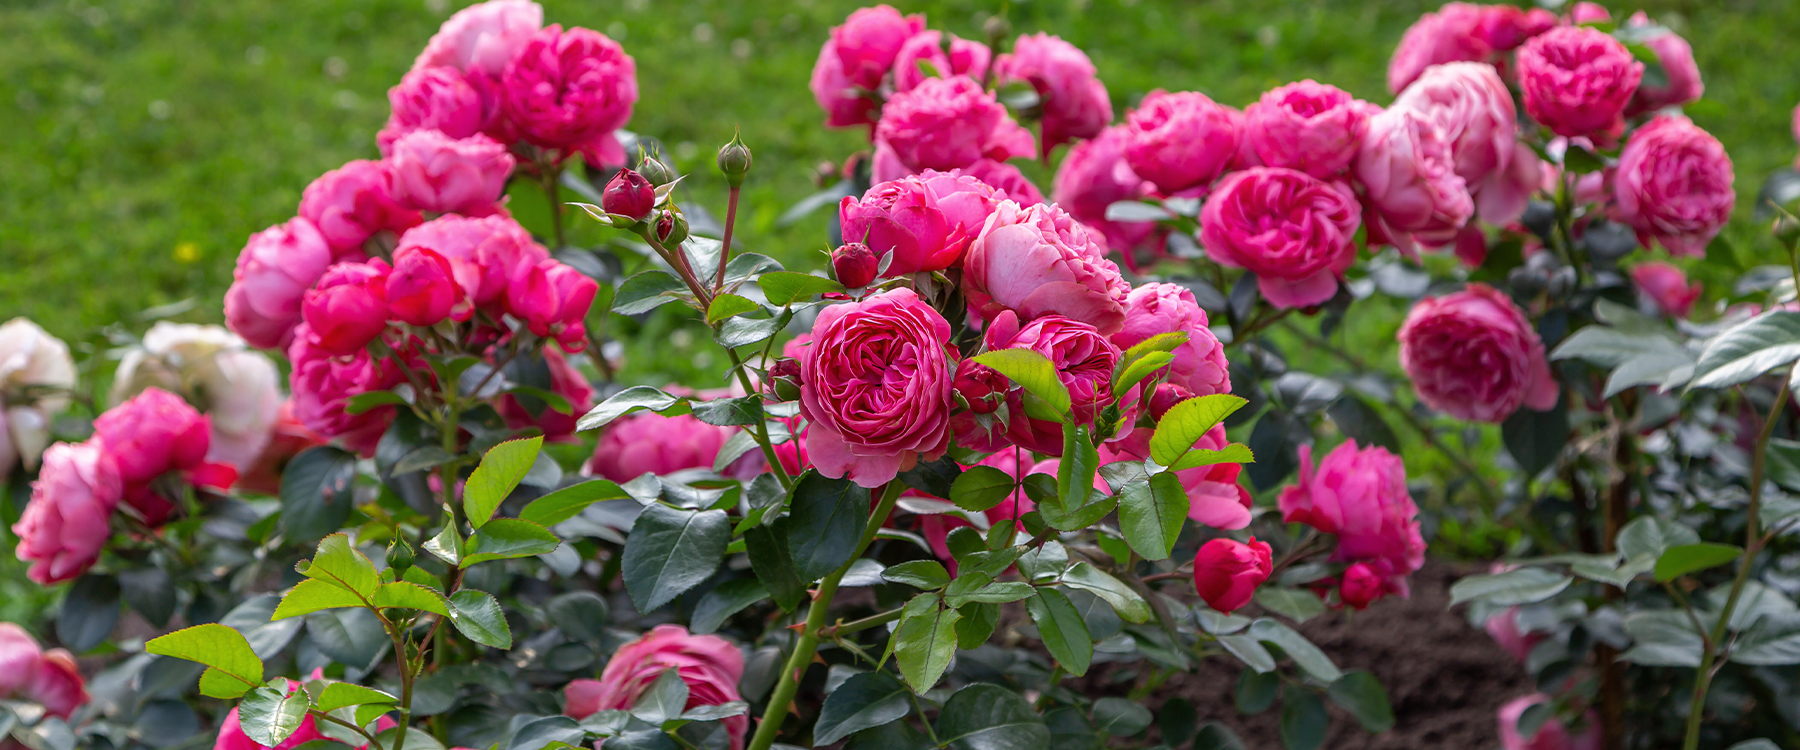 10 Secrets to Successful Rose Gardening